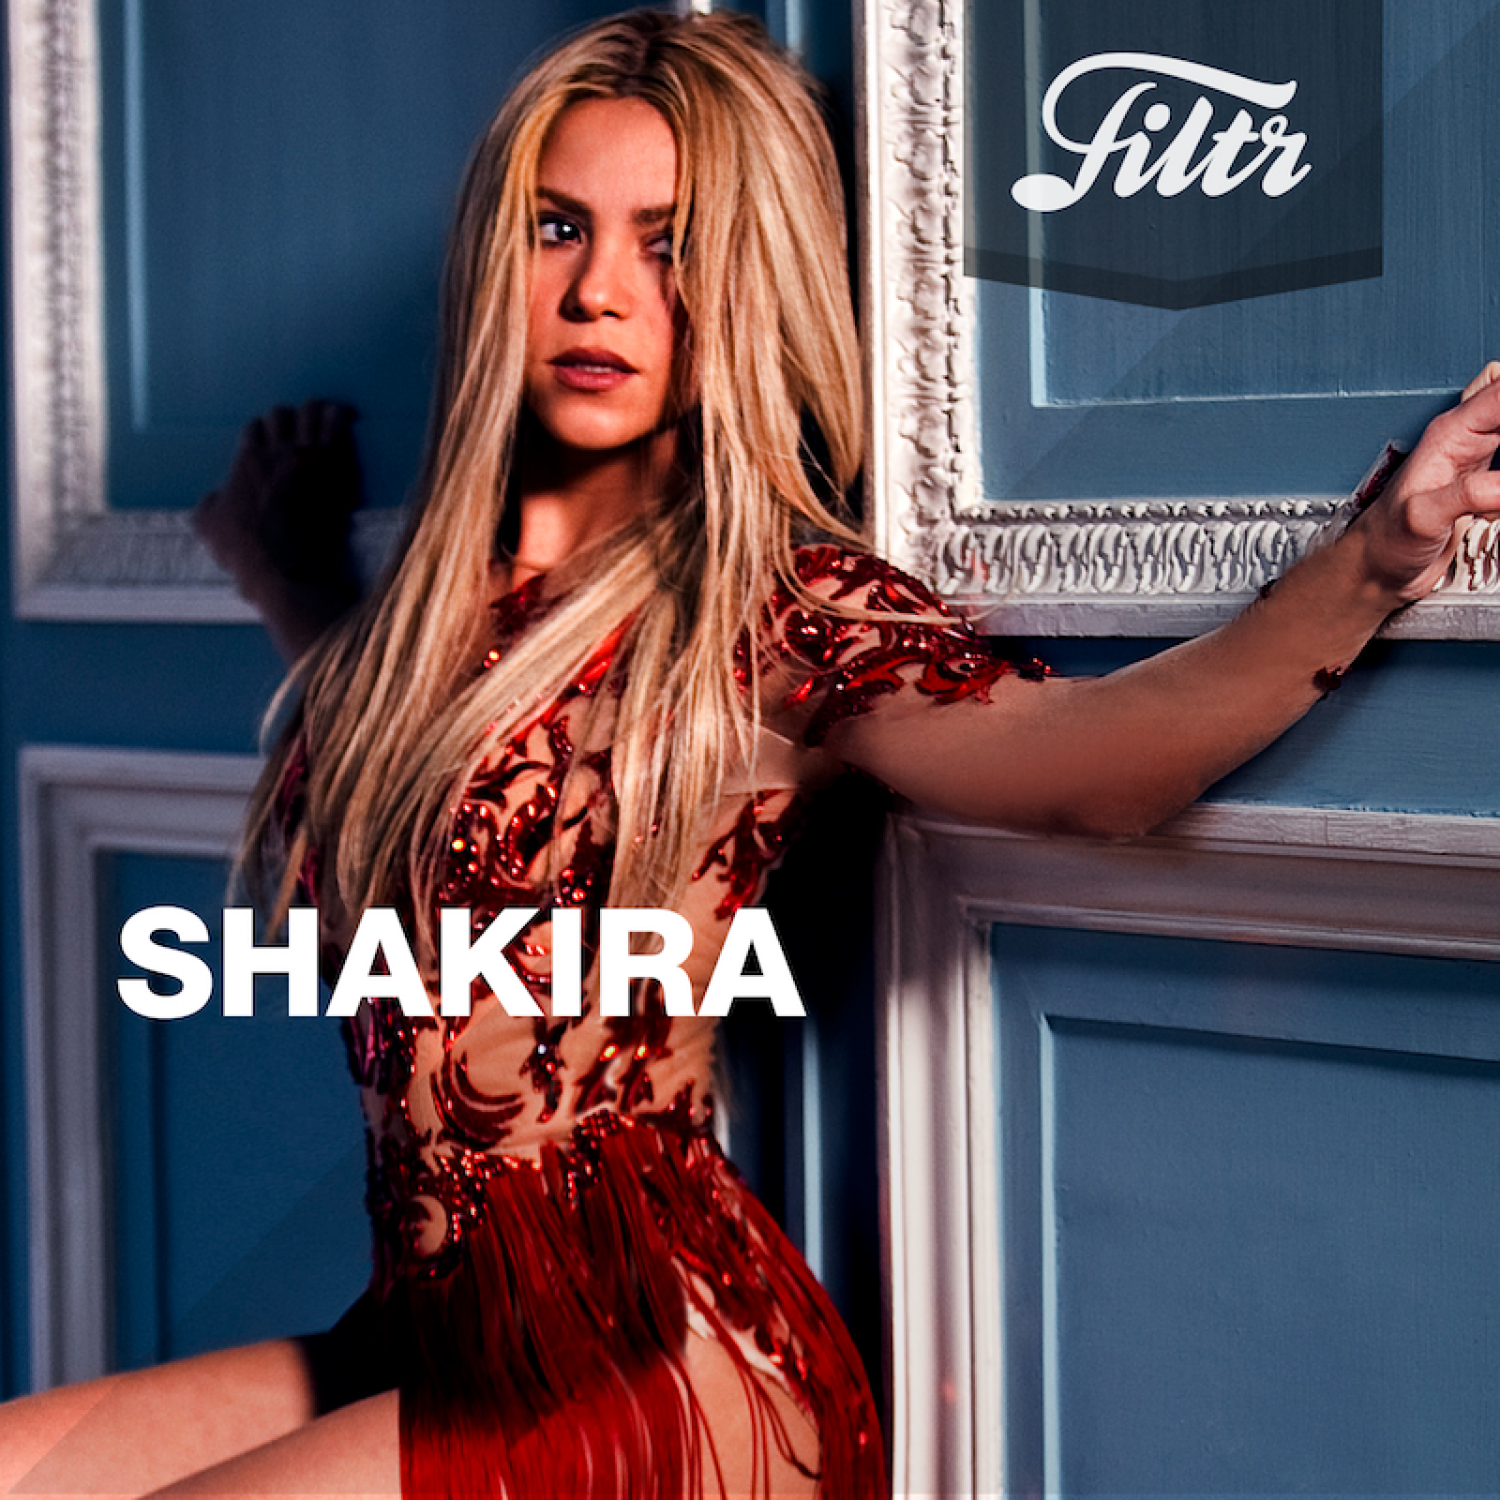 Shakira music videos 2017 saildase